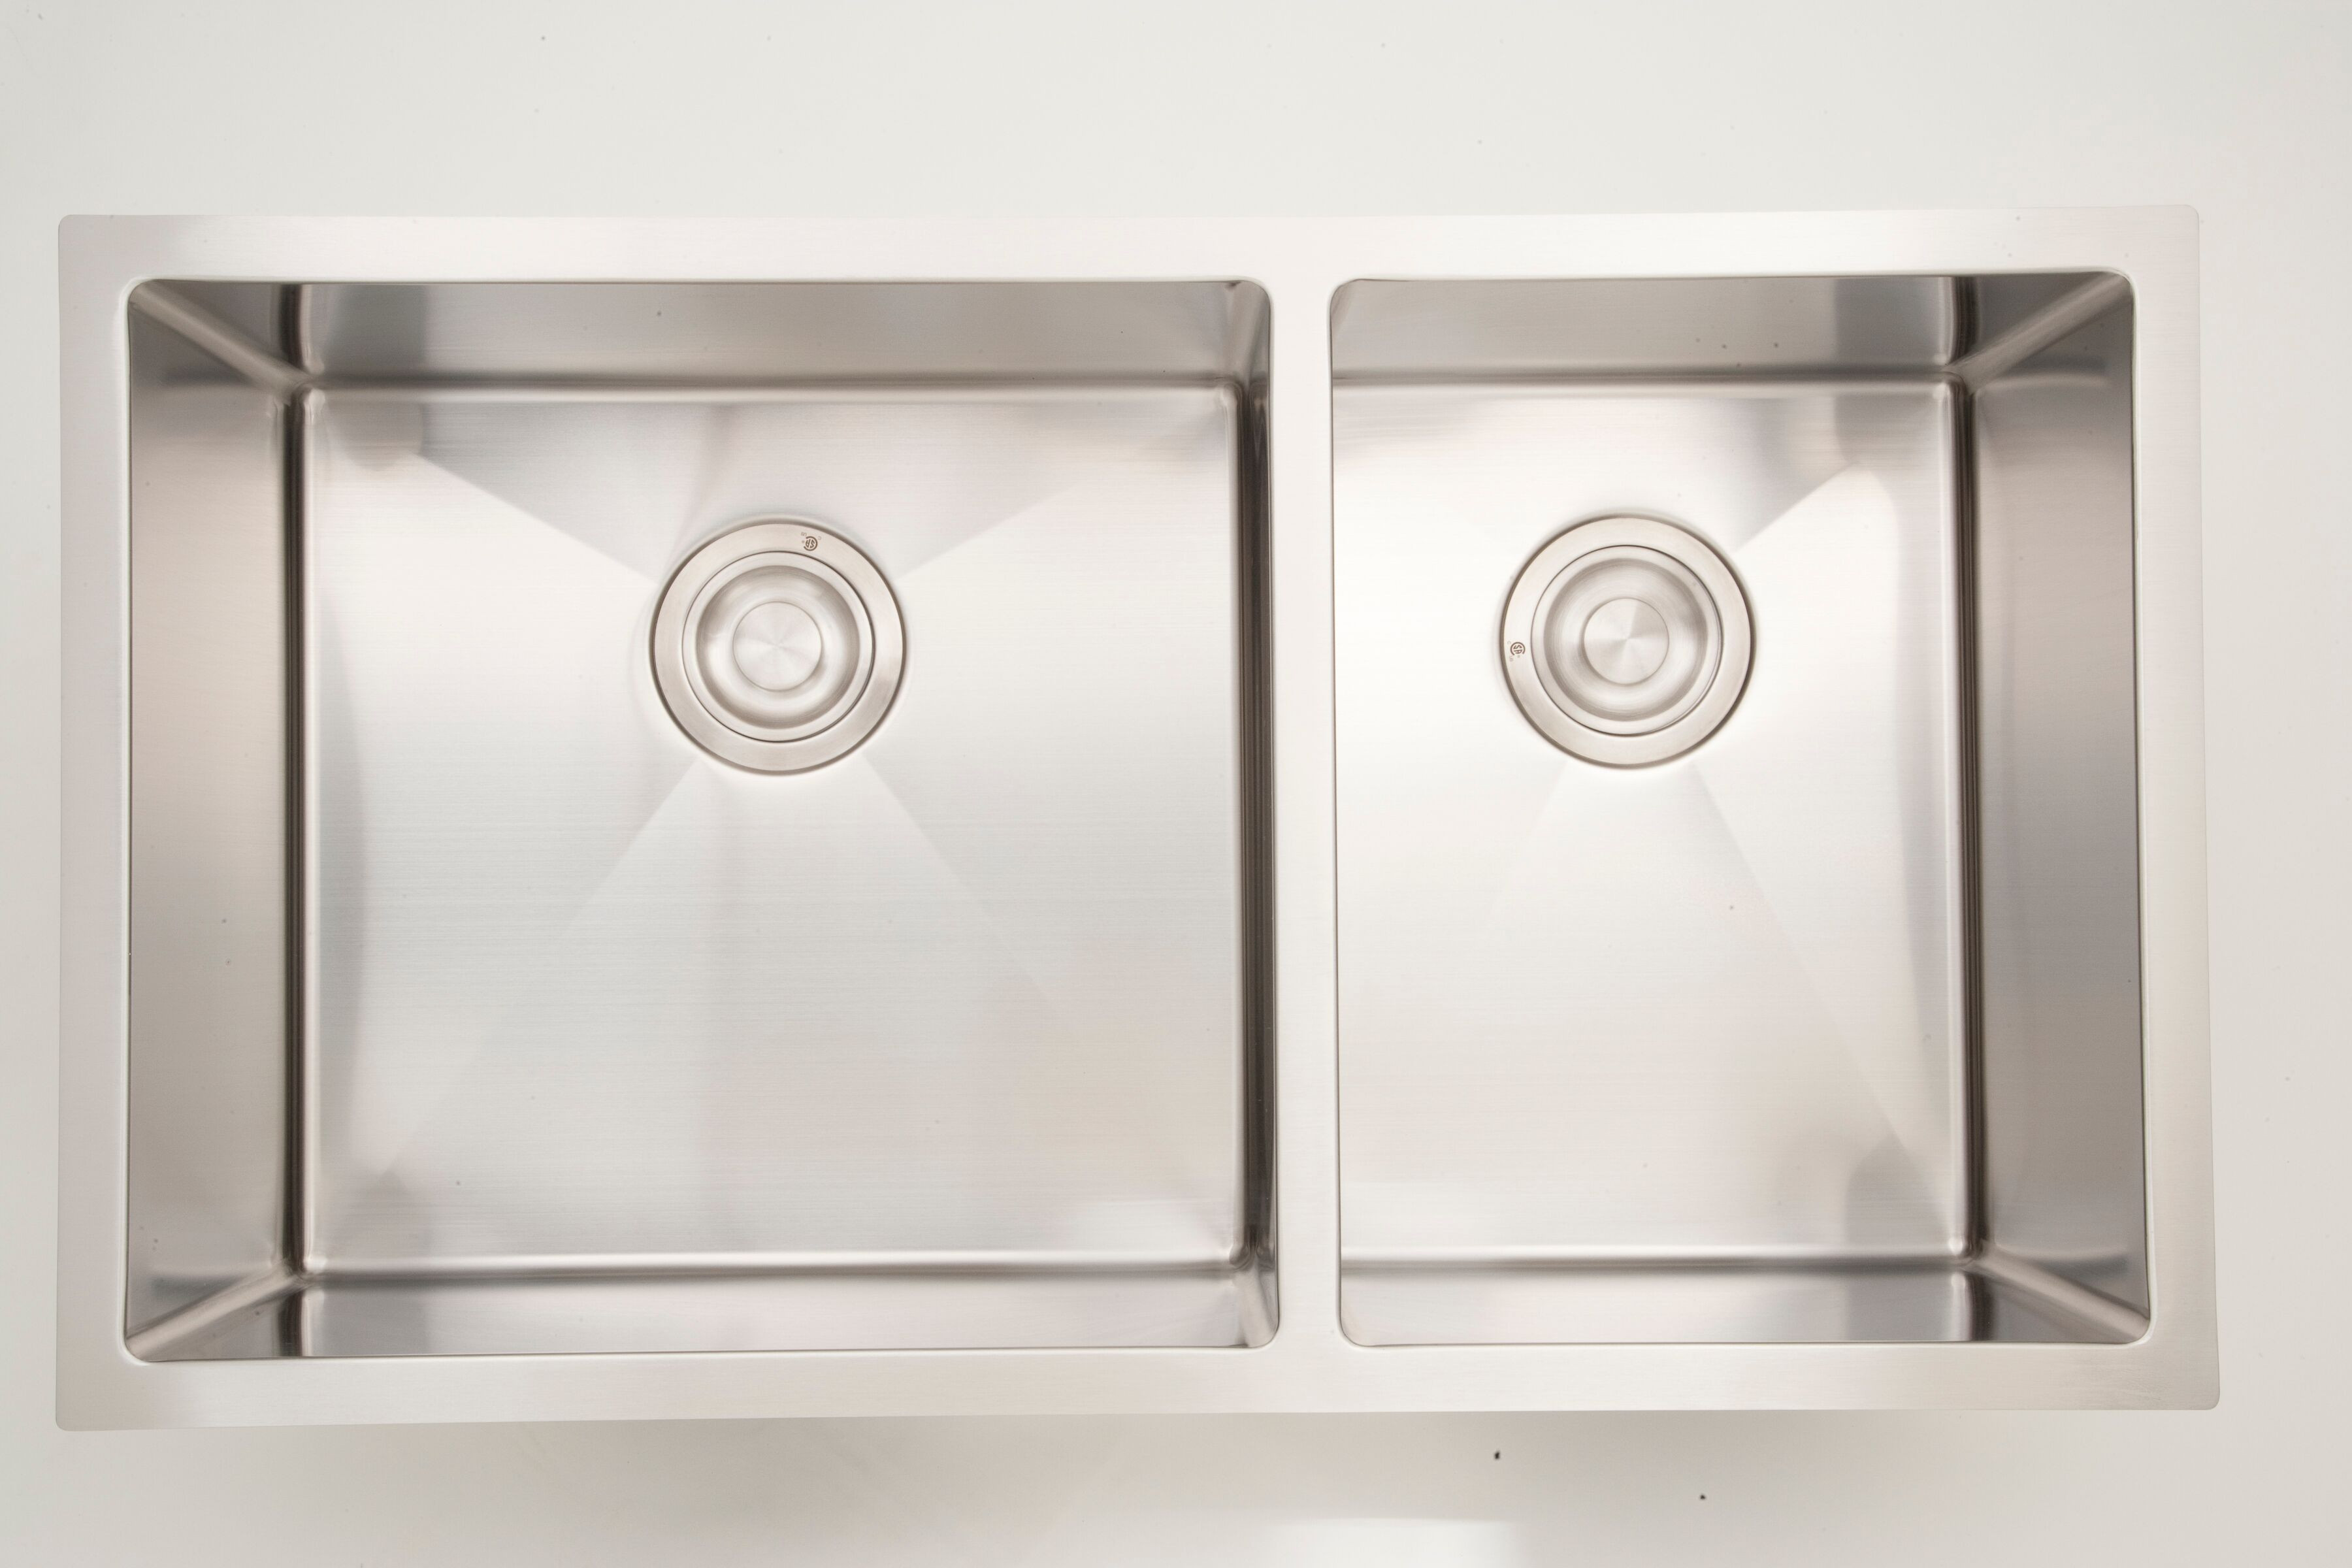 American Imagination AI-27407 33 Inch Undermount Kitchen Sink In Chrome